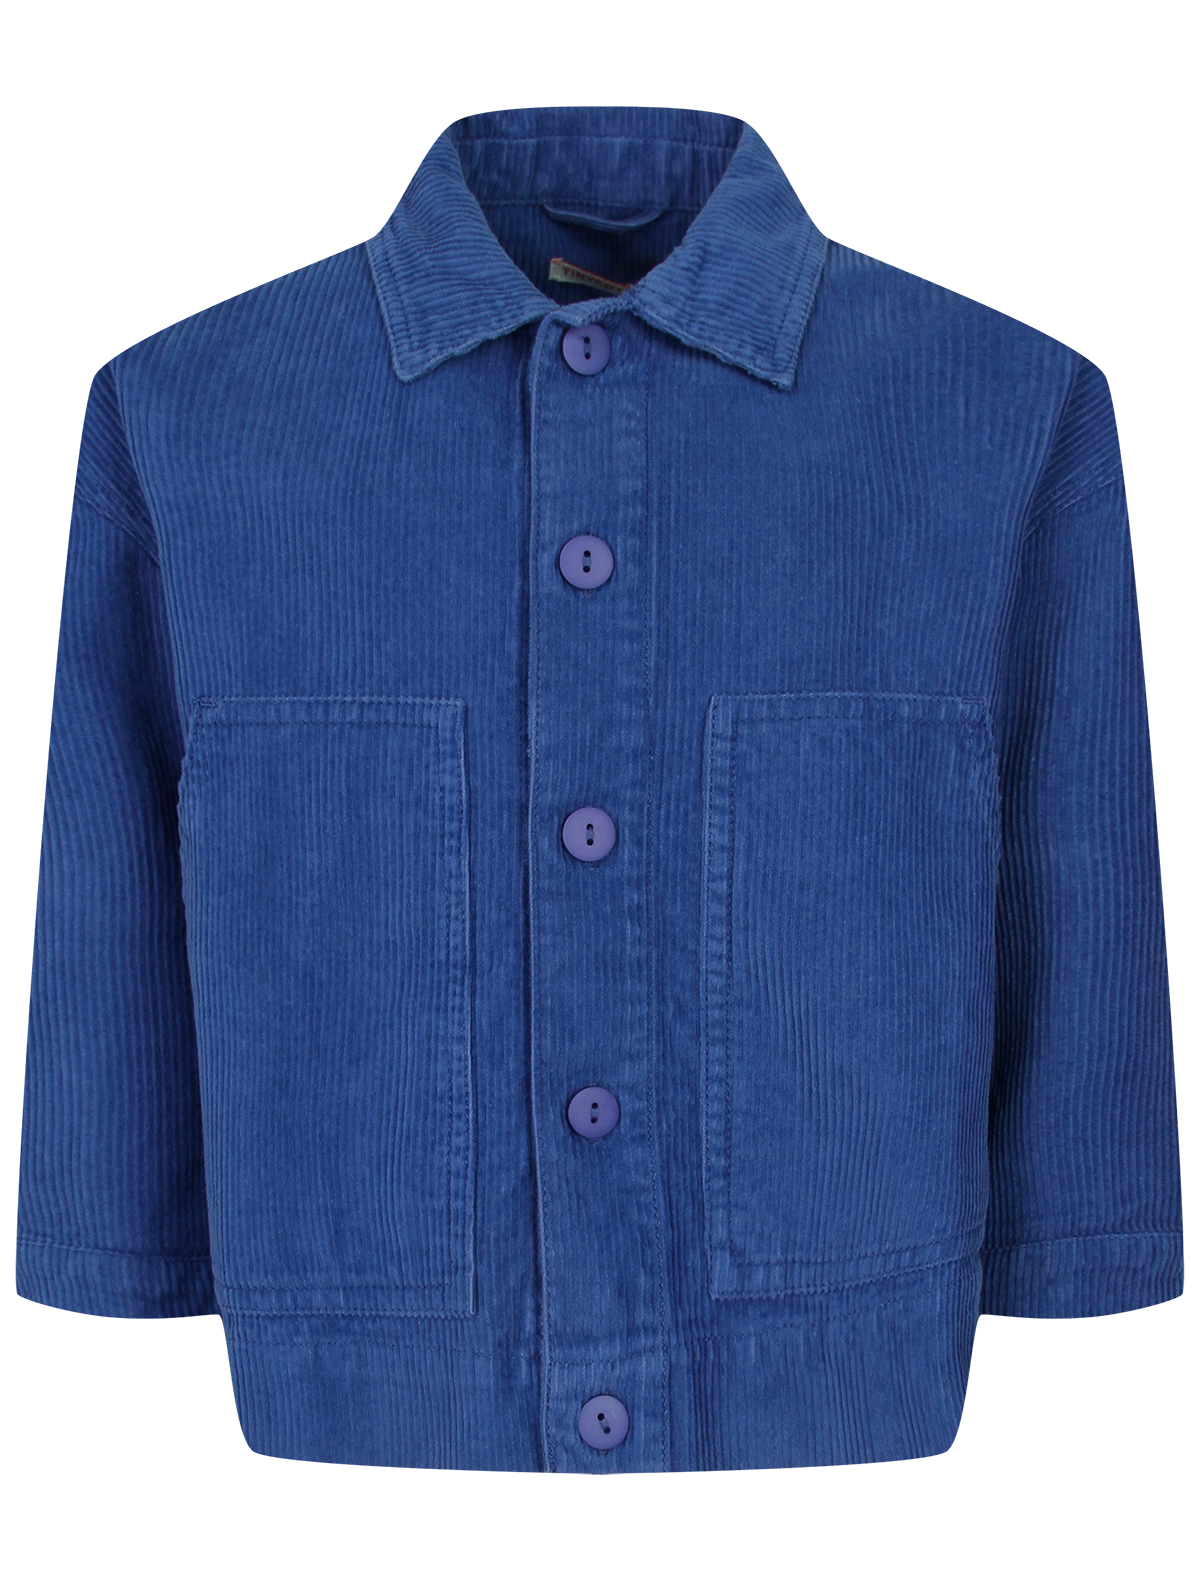 Куртка TINYCOTTONS 2618729, цвет синий, размер 6 1074519384615 - фото 1